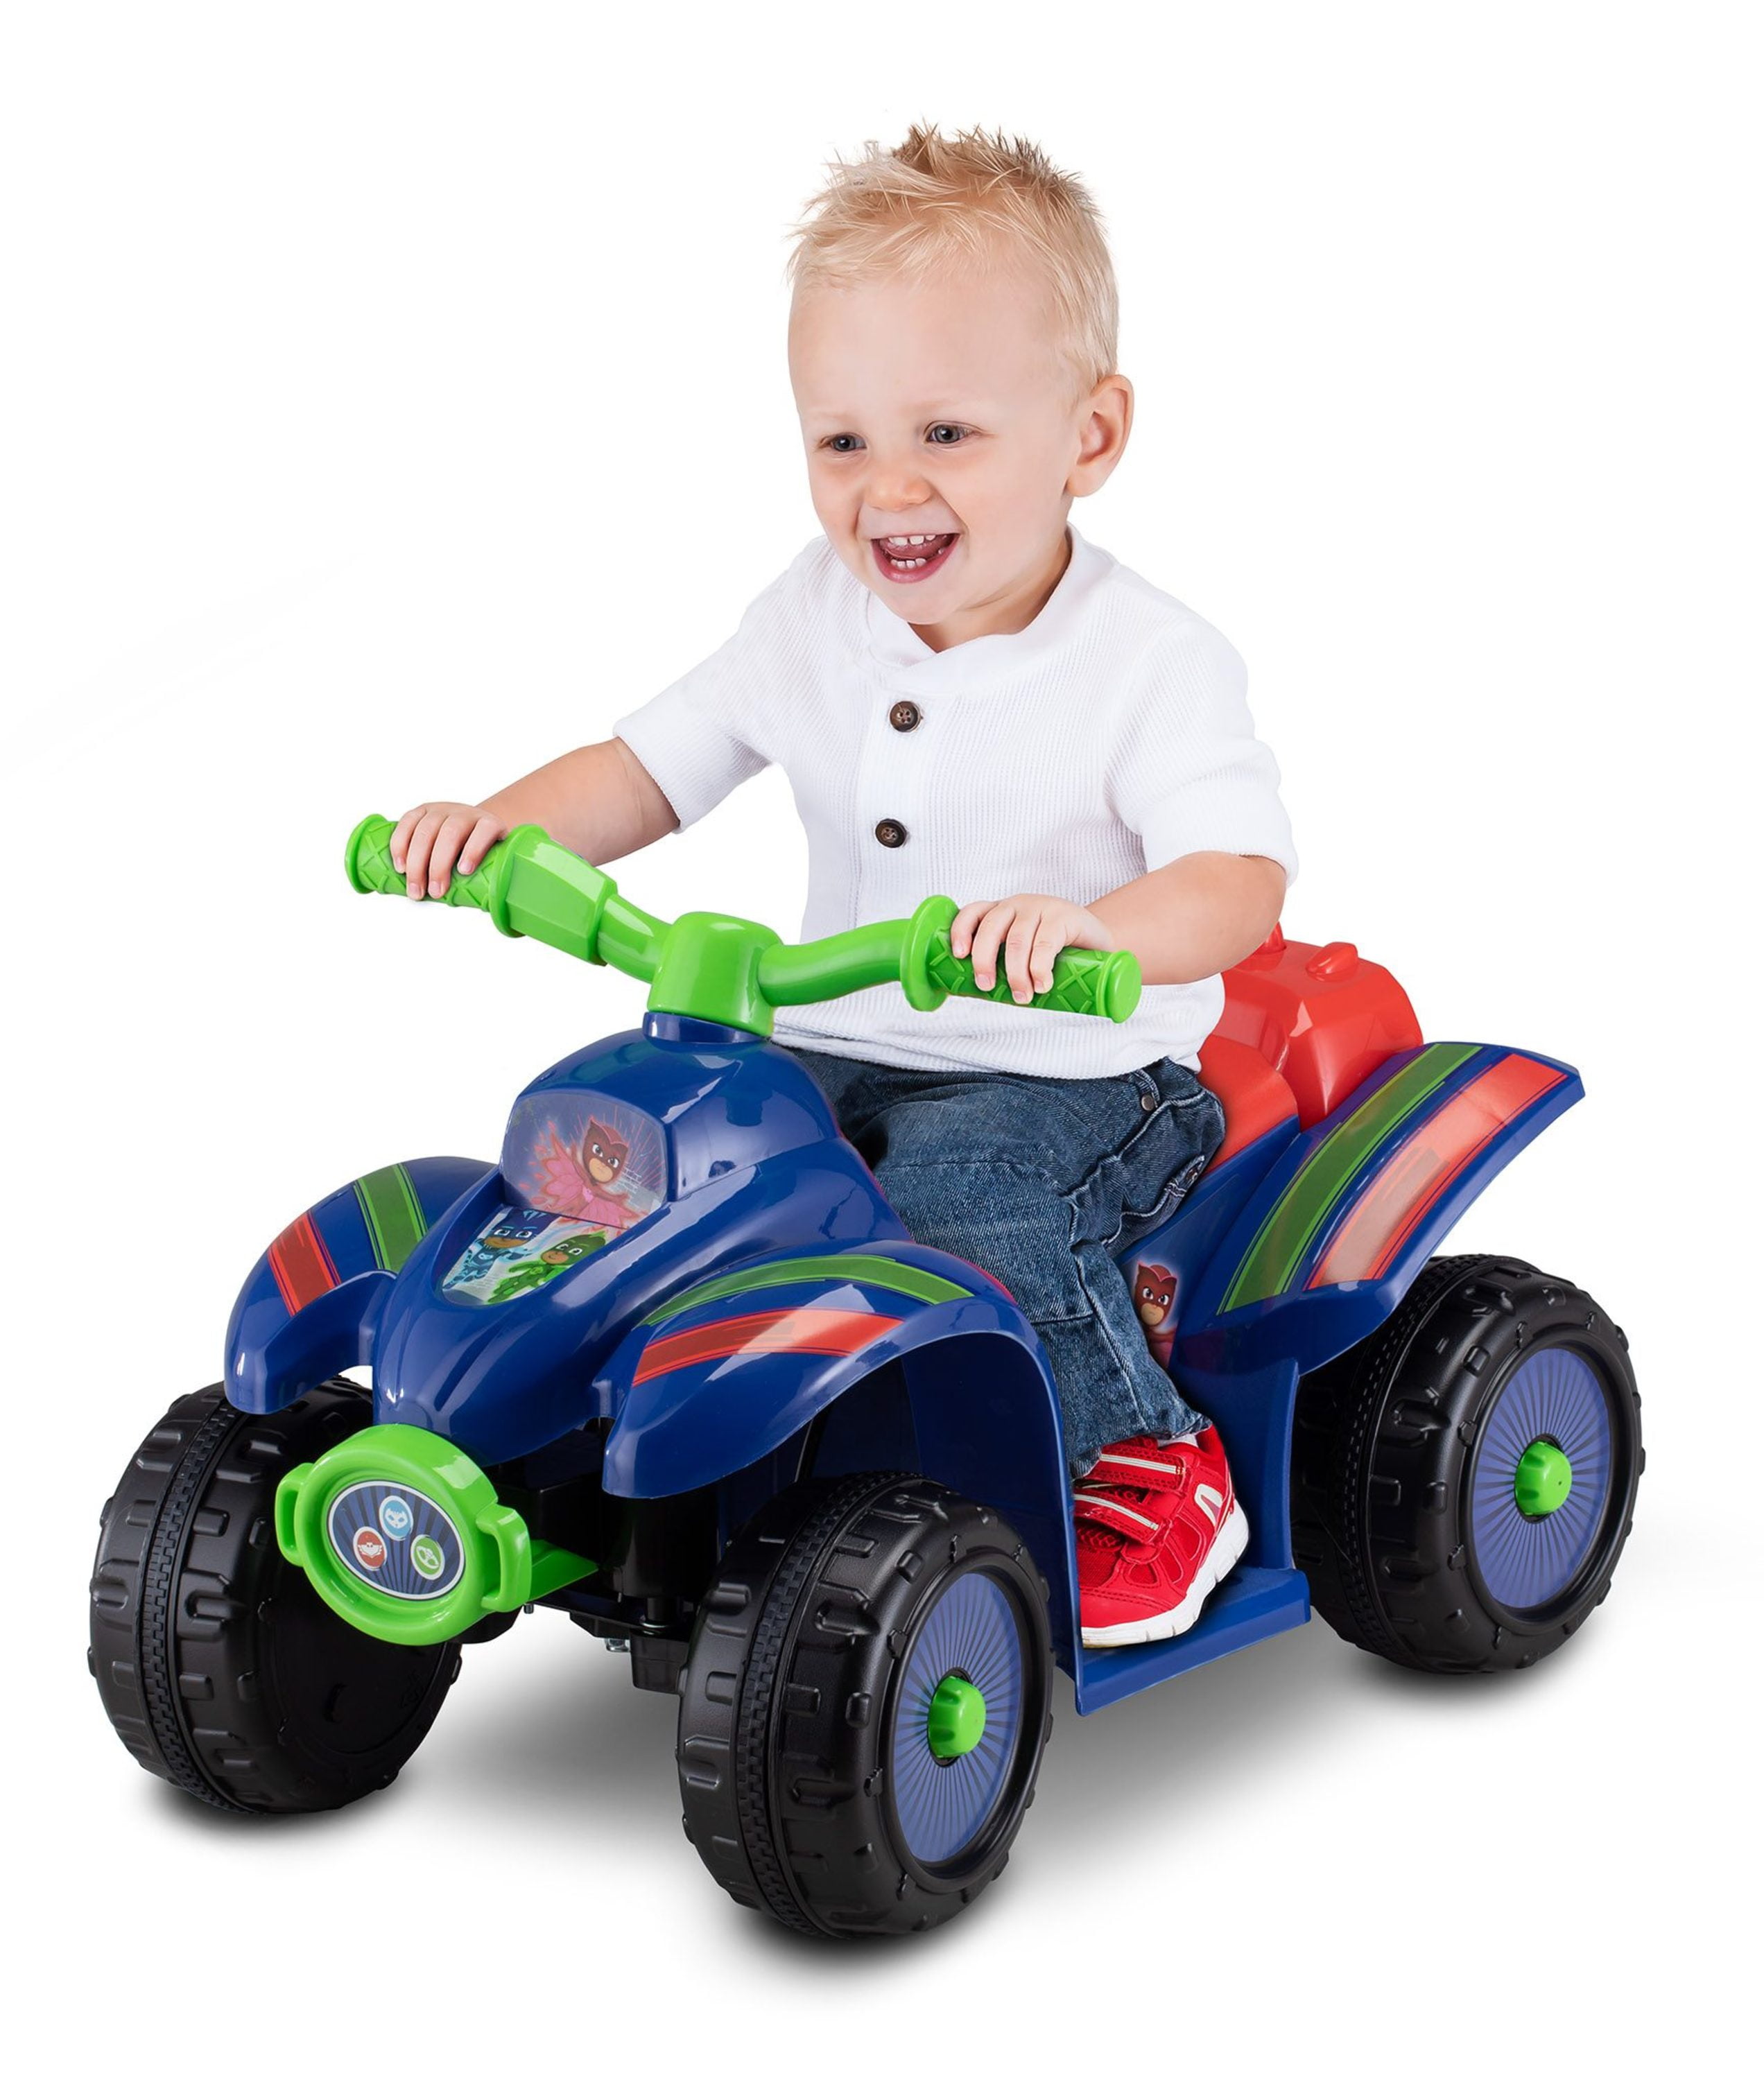 walmart riding toys for kids